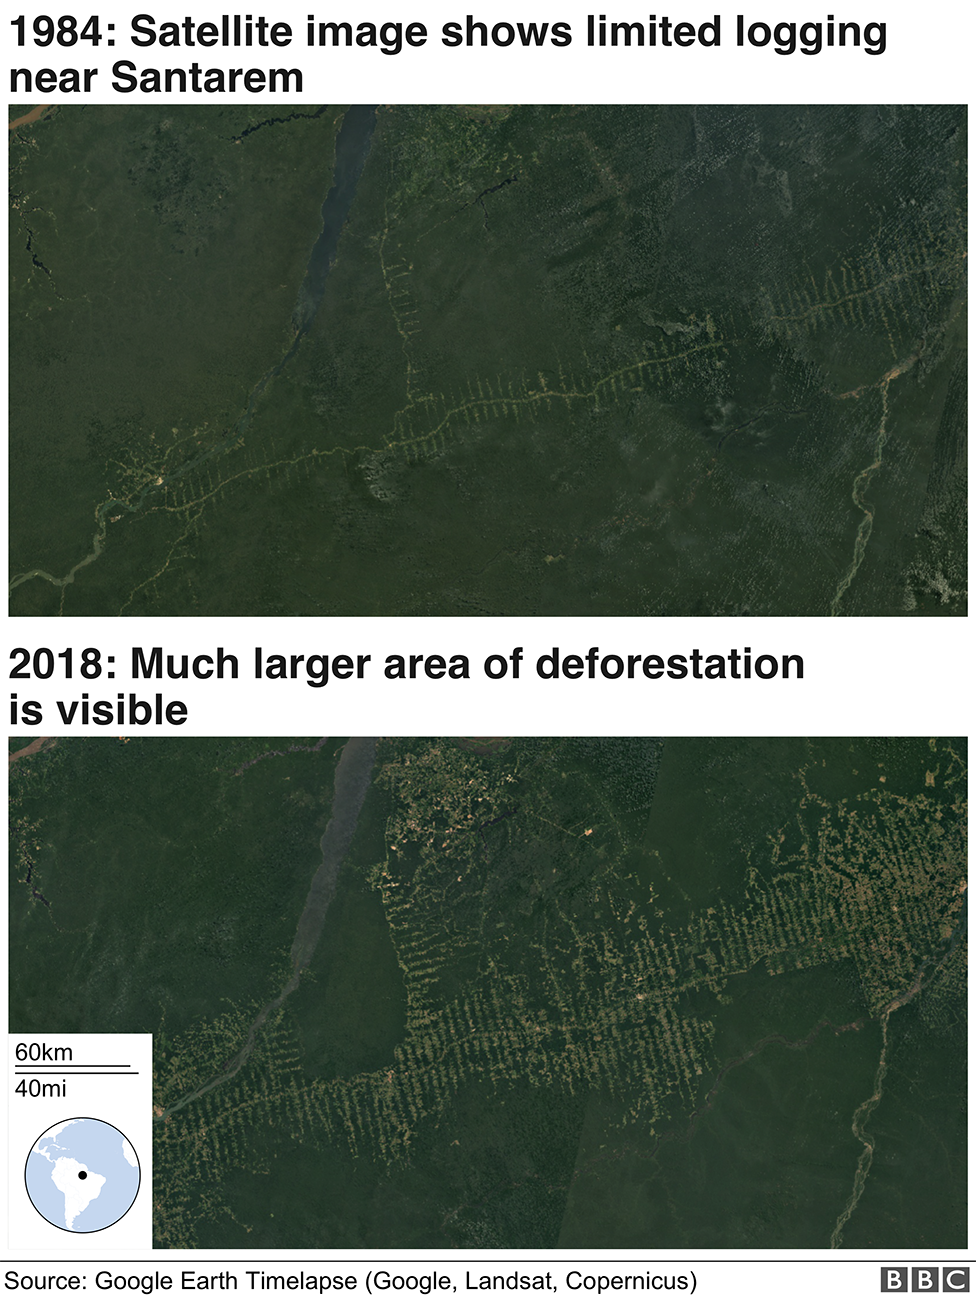 Satellite images of deforestation showing change since 1984